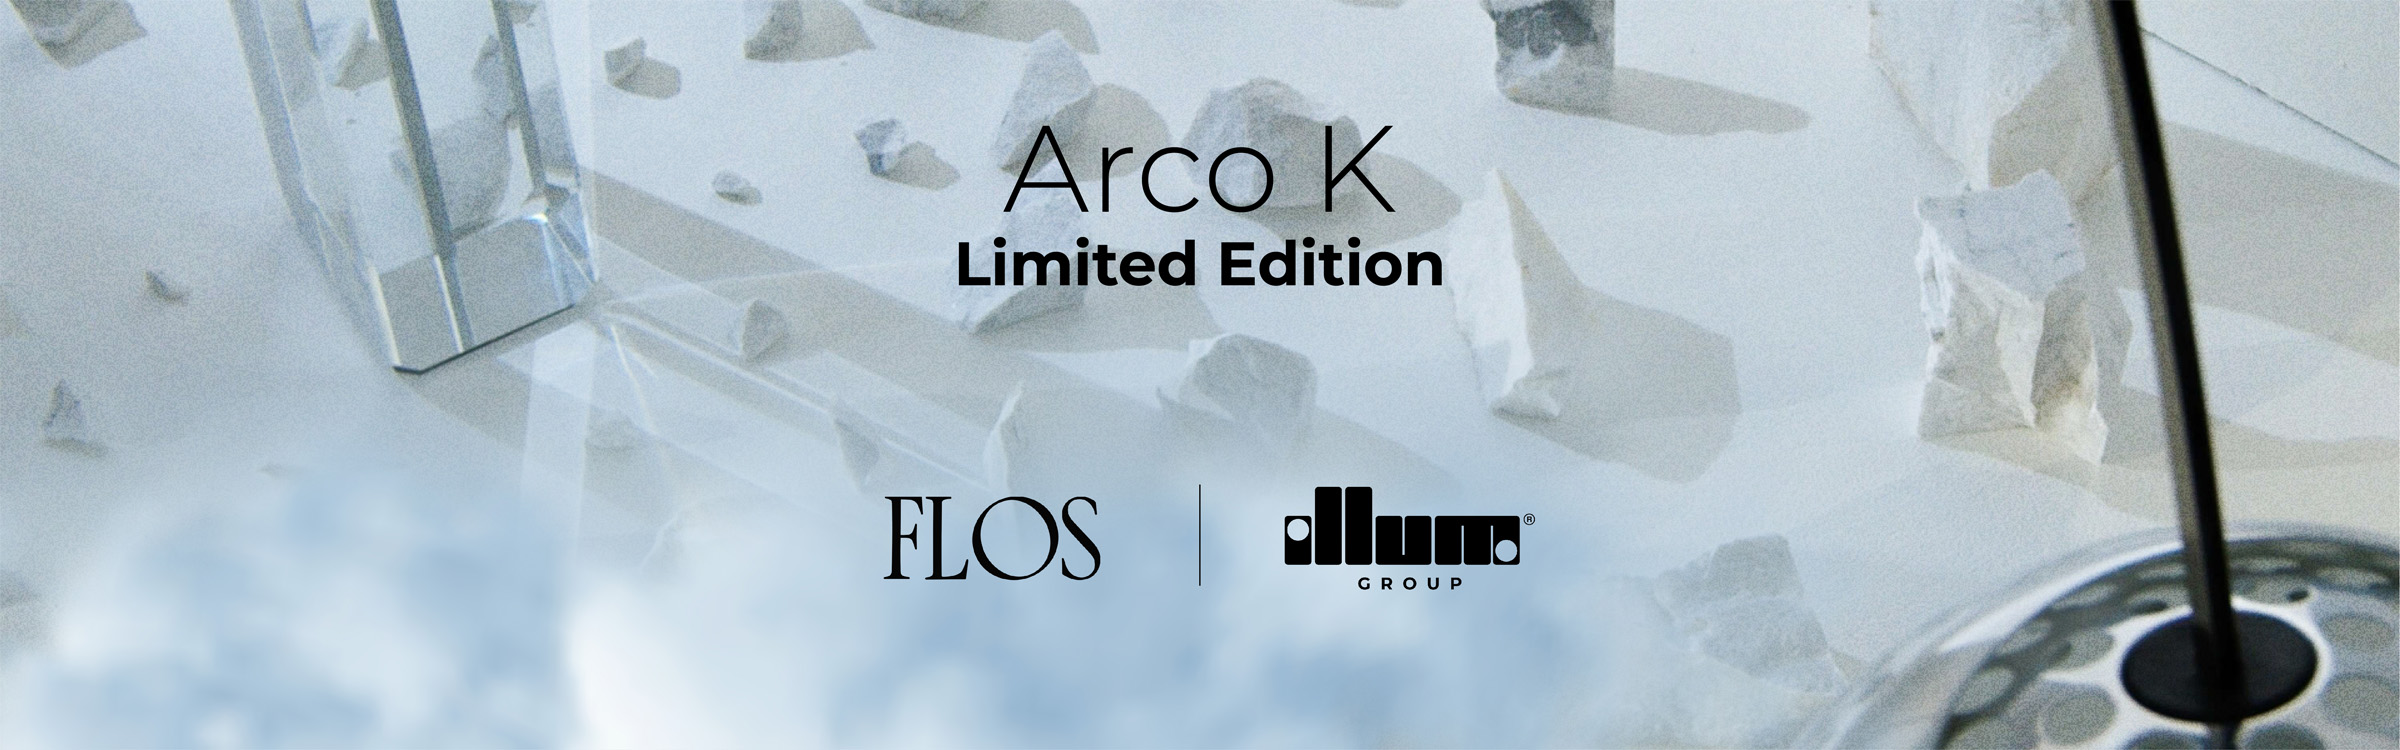 flos-arco-k-limited-edition-illum-group